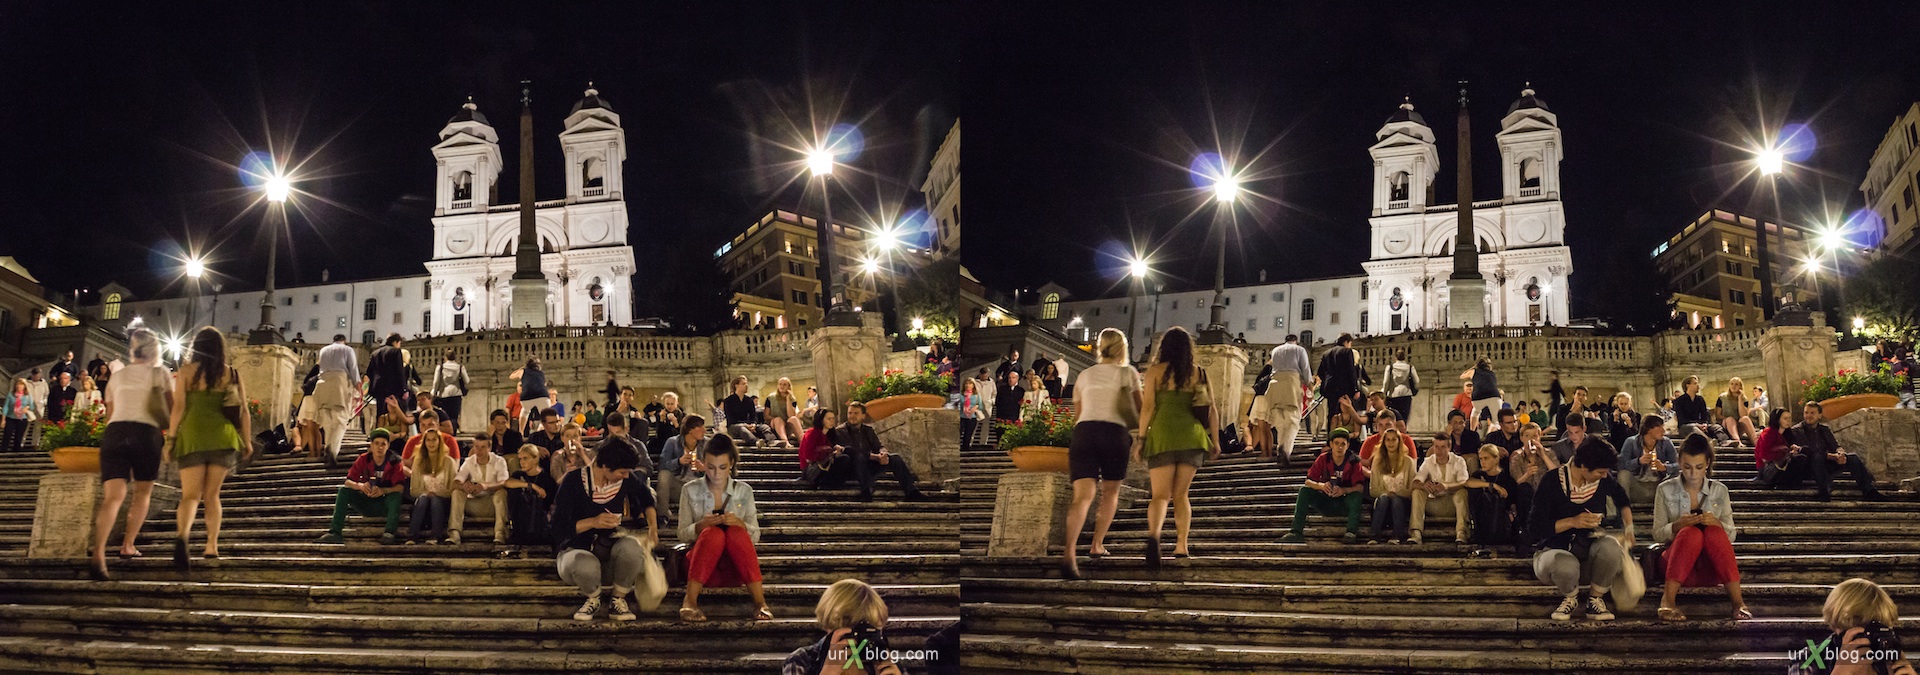 2012, Santissima Trinita dei Monti church, Spanish steps, Spanish square, Rome, Italy, Europe, 3D, stereo pair, cross-eyed, crossview, cross view stereo pair